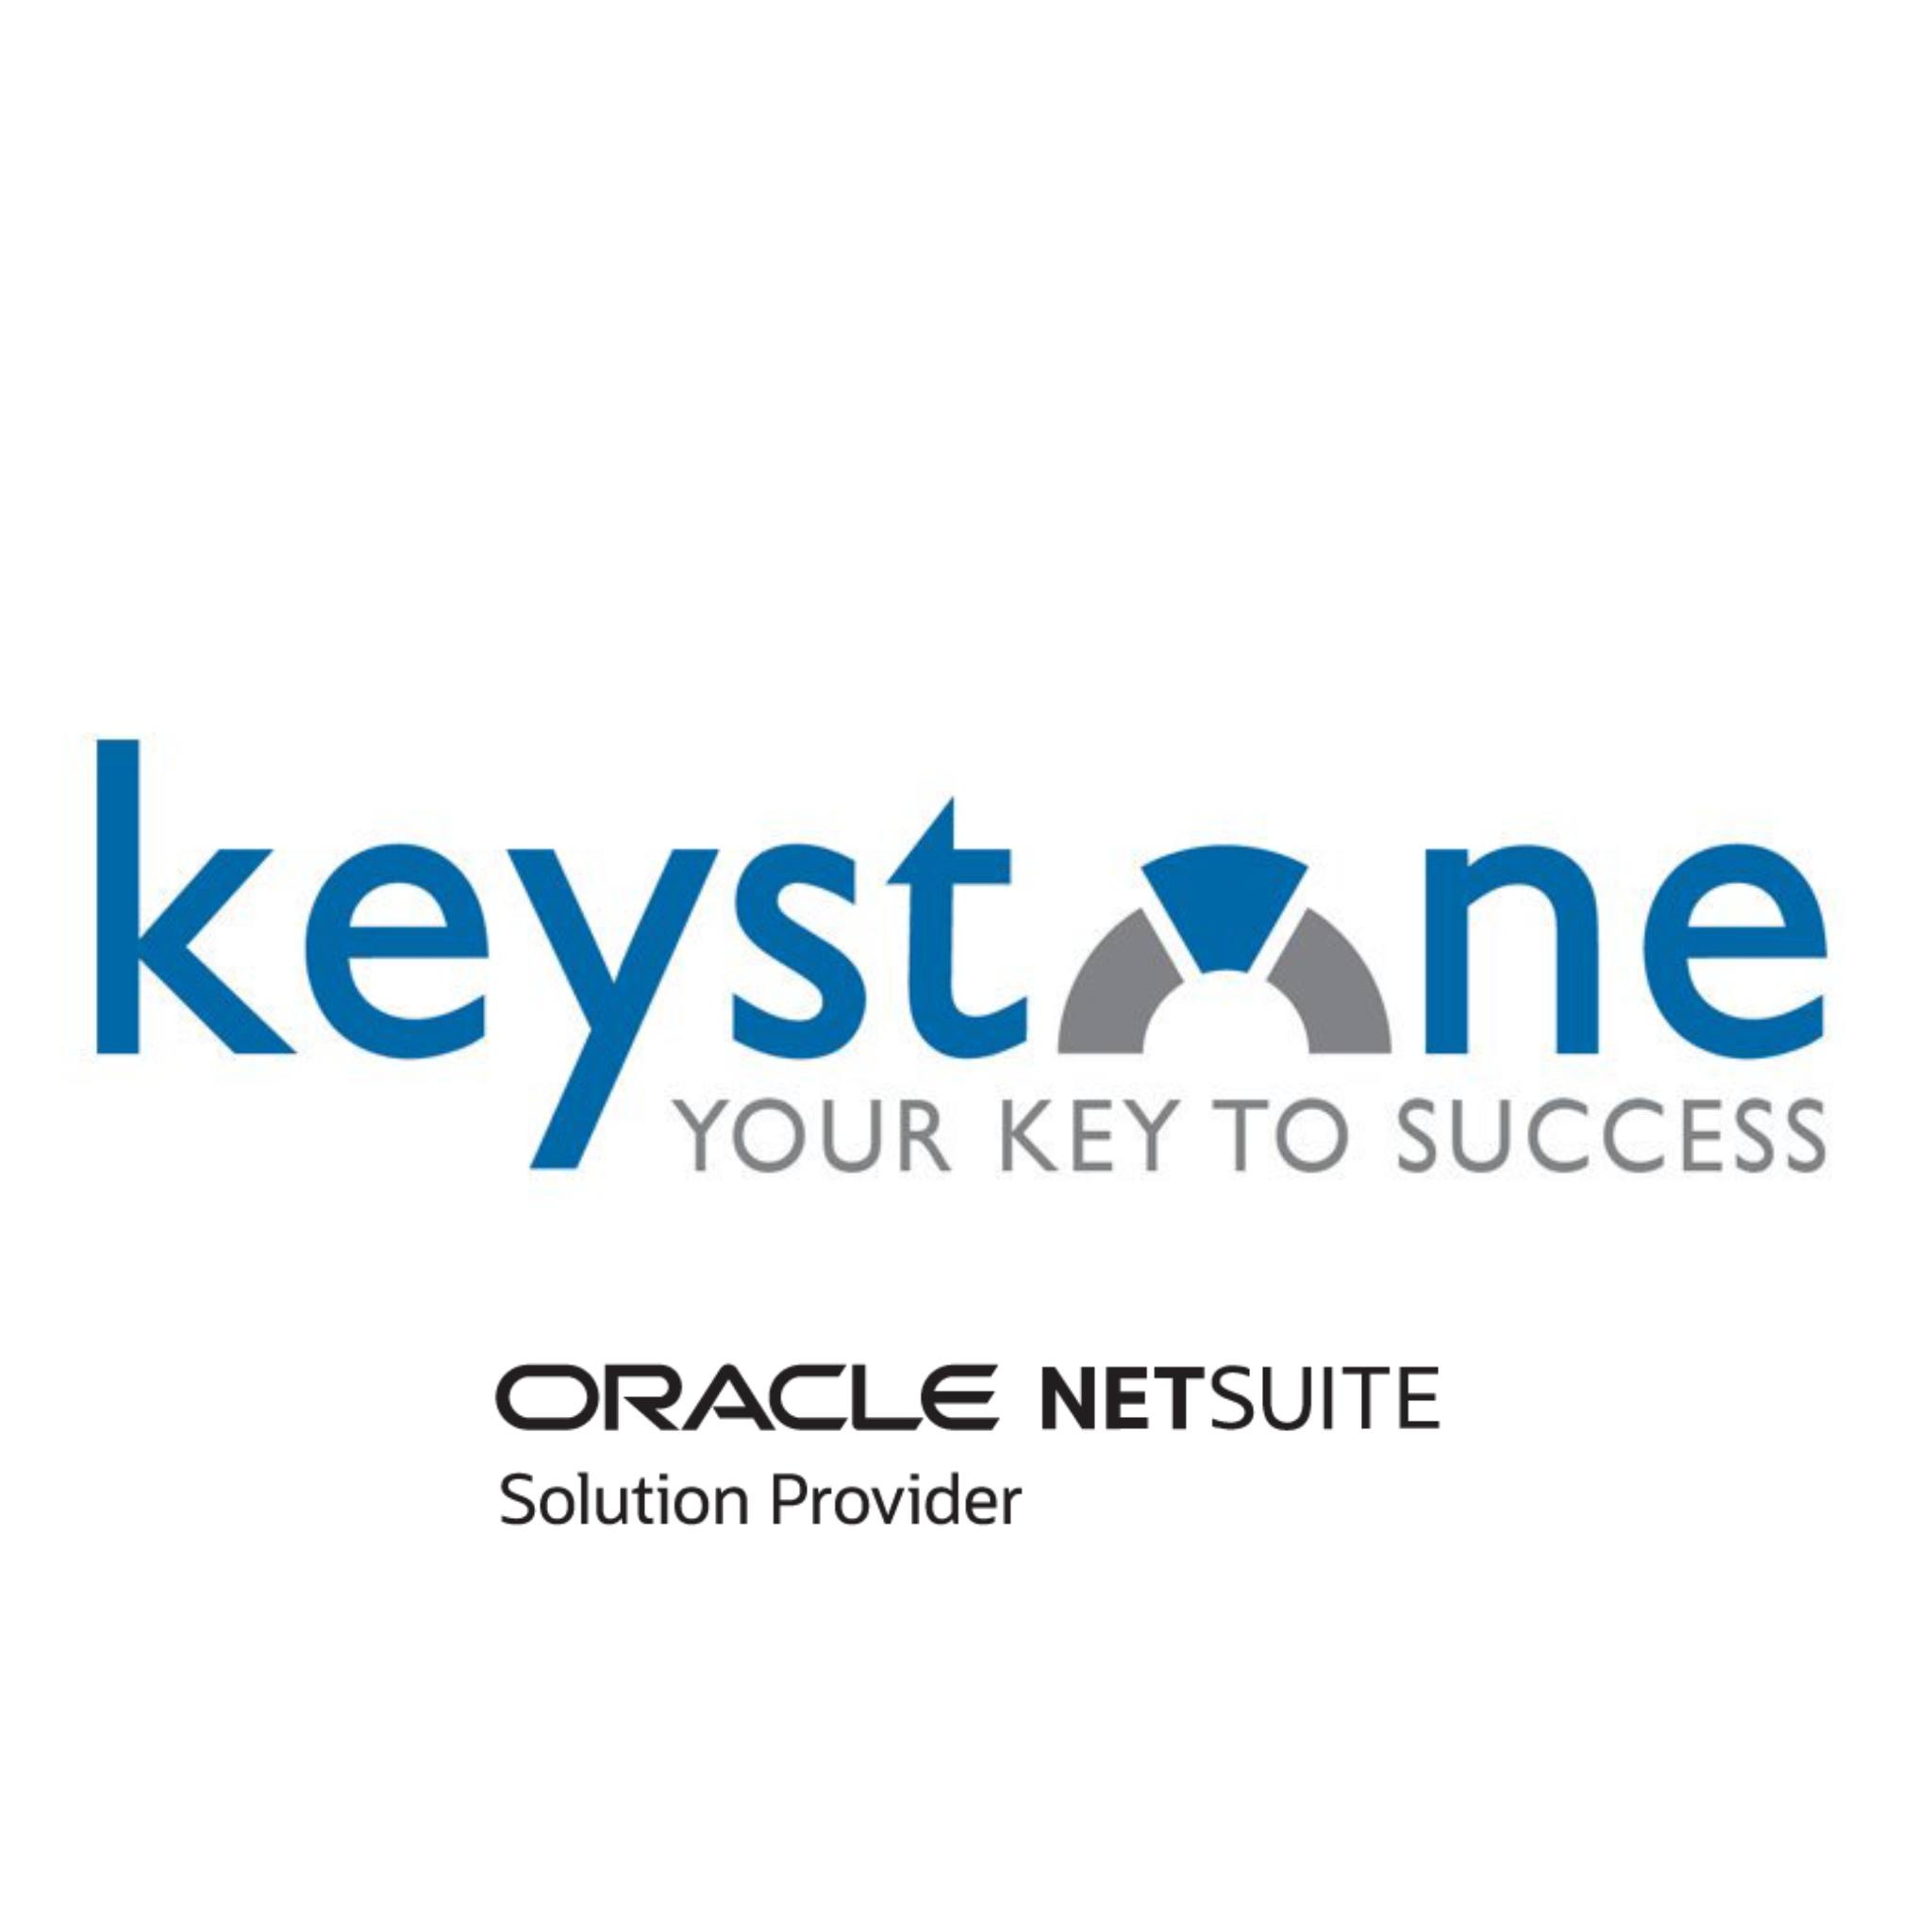 Keystone Business Services